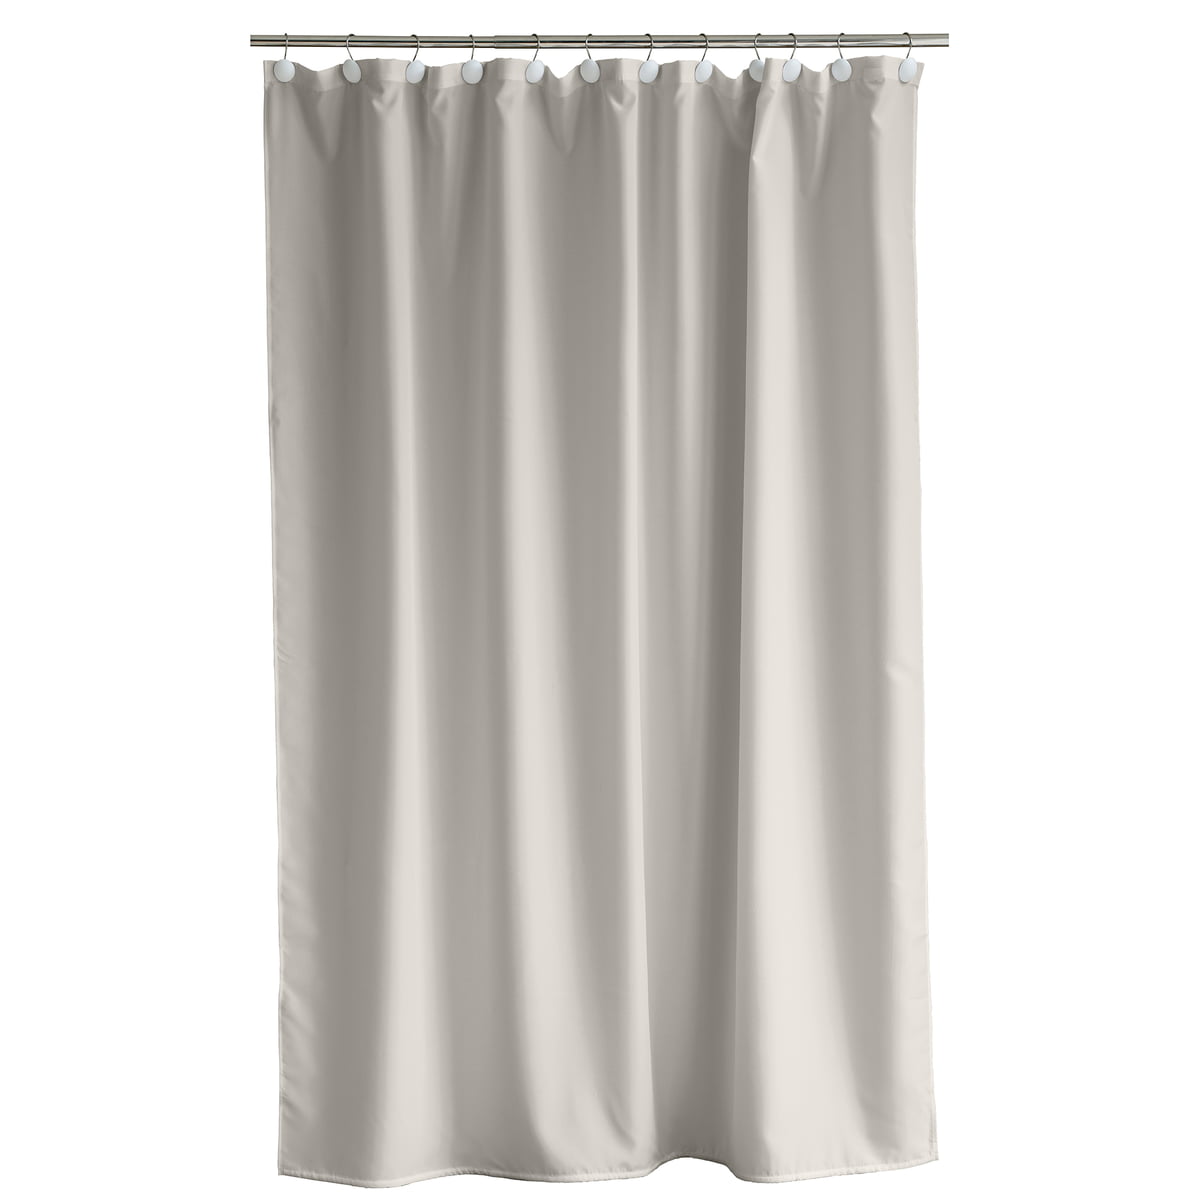 södahl - comfort rideau de douche, 180 x 200 cm, beige